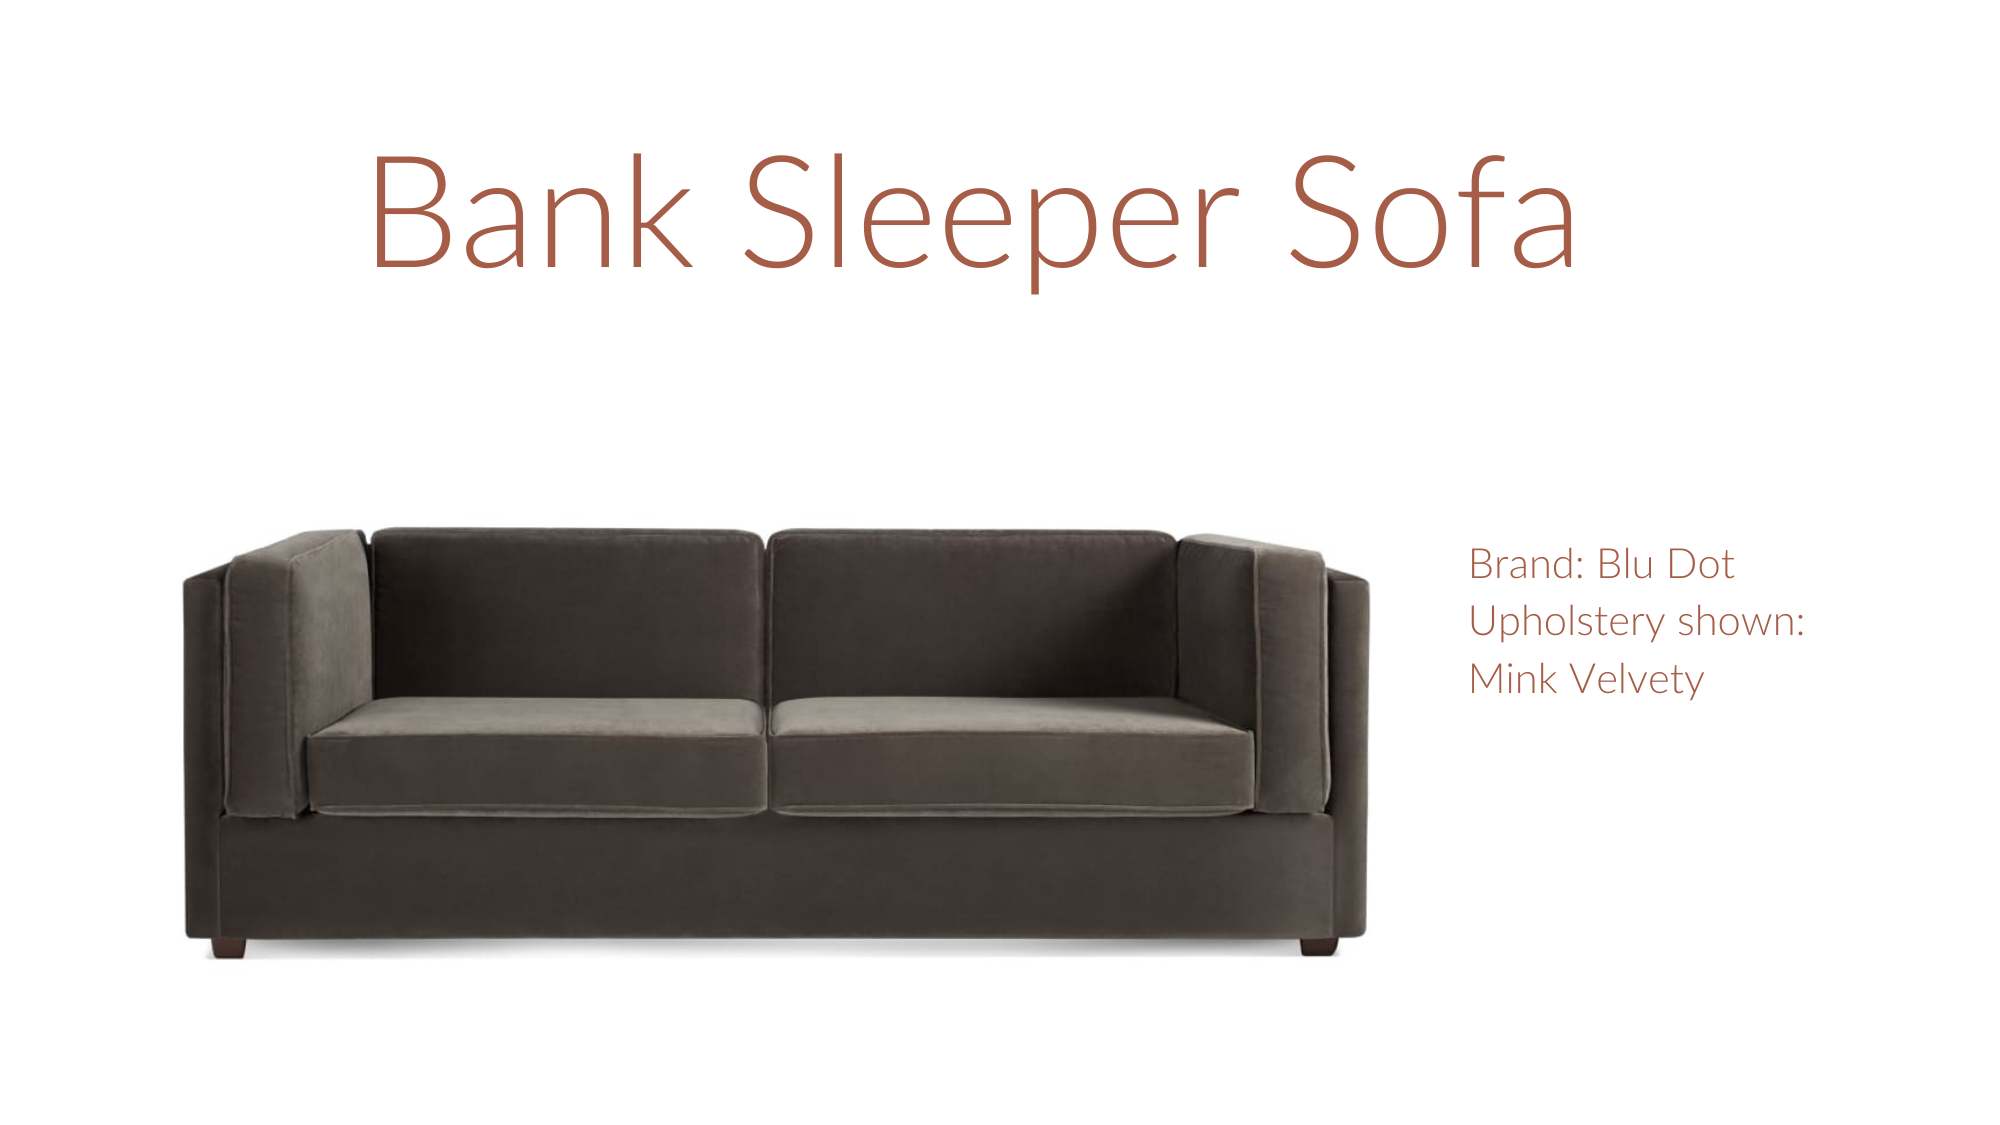 Bank sleeper sofa in mink velvet brown grey